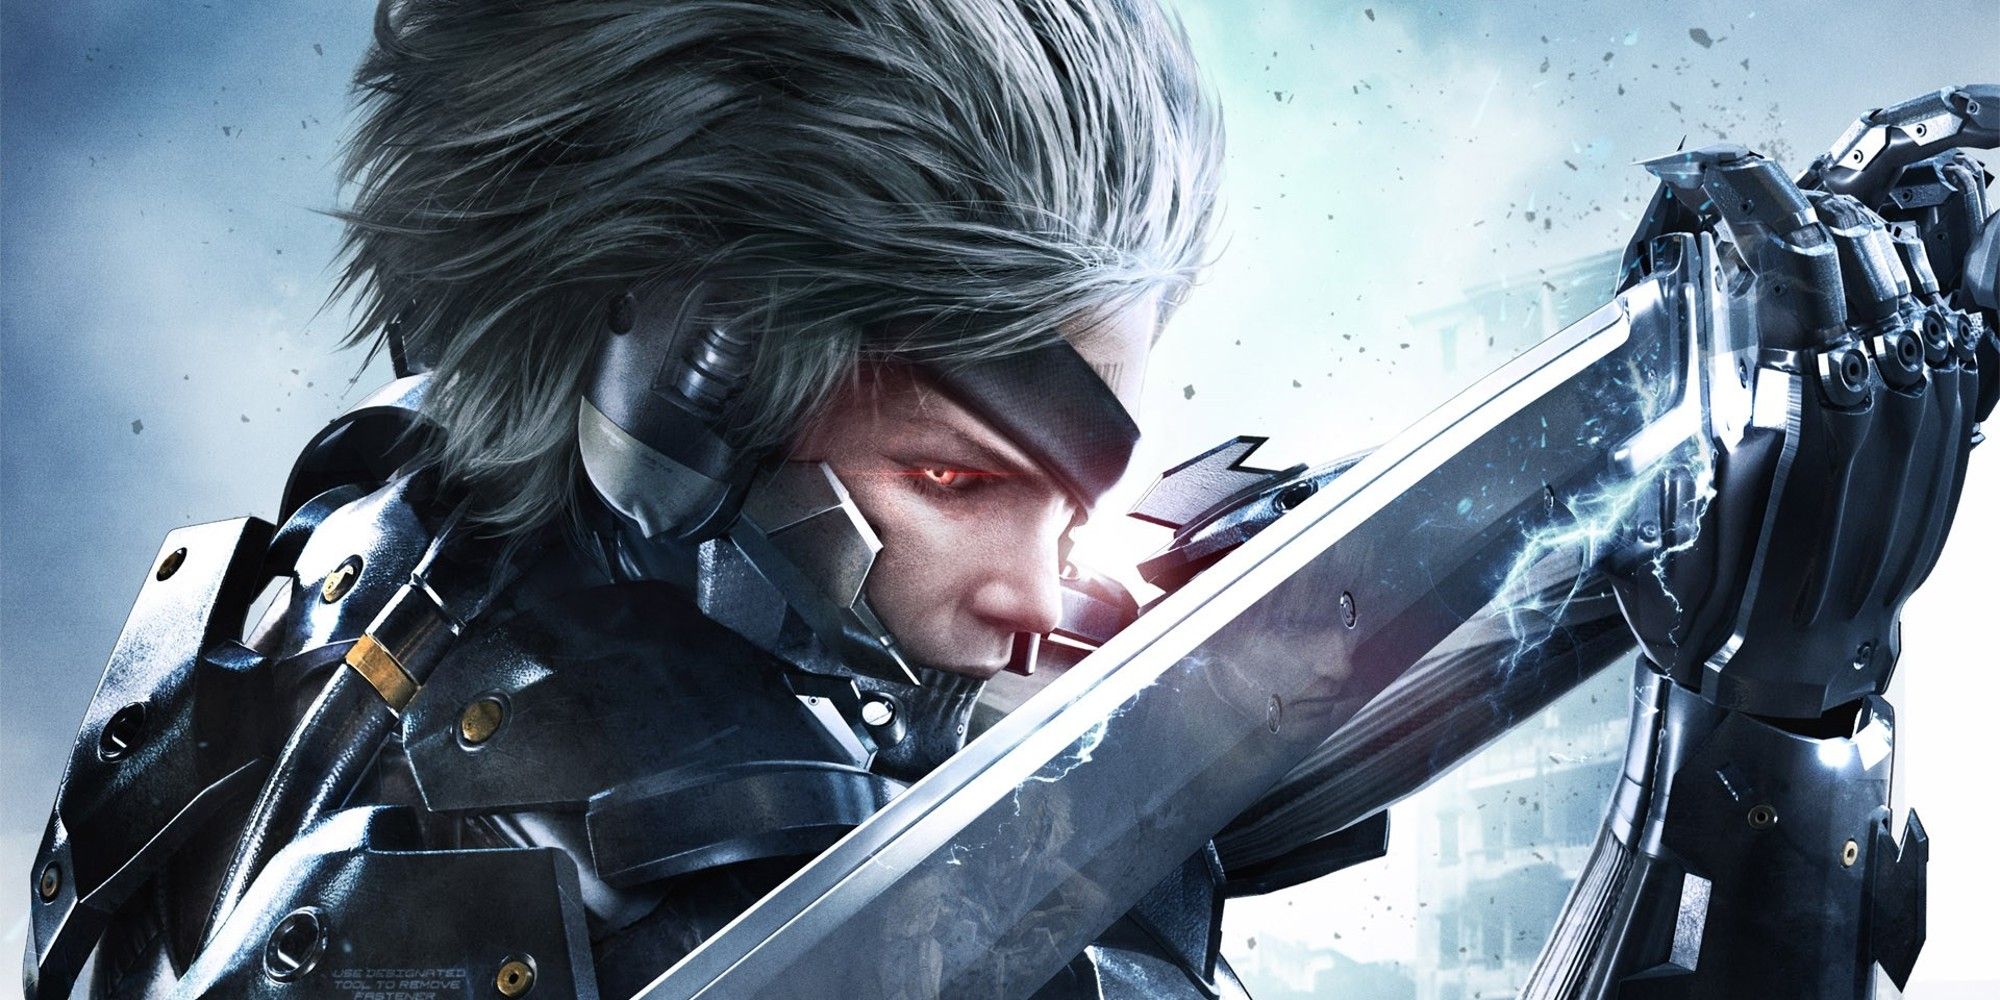 Raiden from Metal Gear Rising Revengeance holding his sword